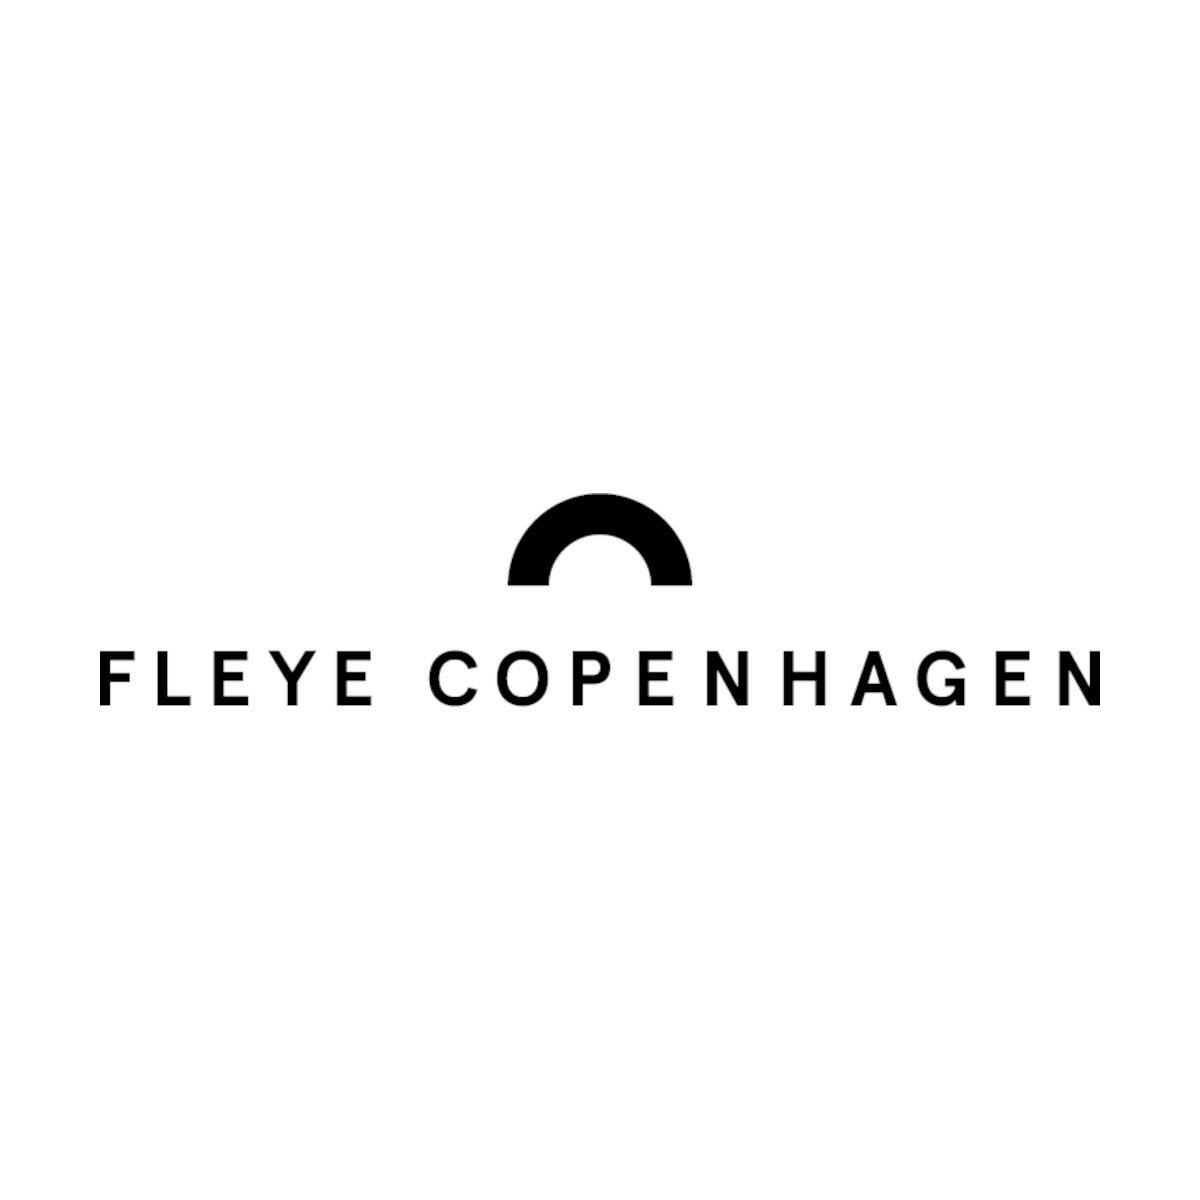 FLEYE Copenhagen